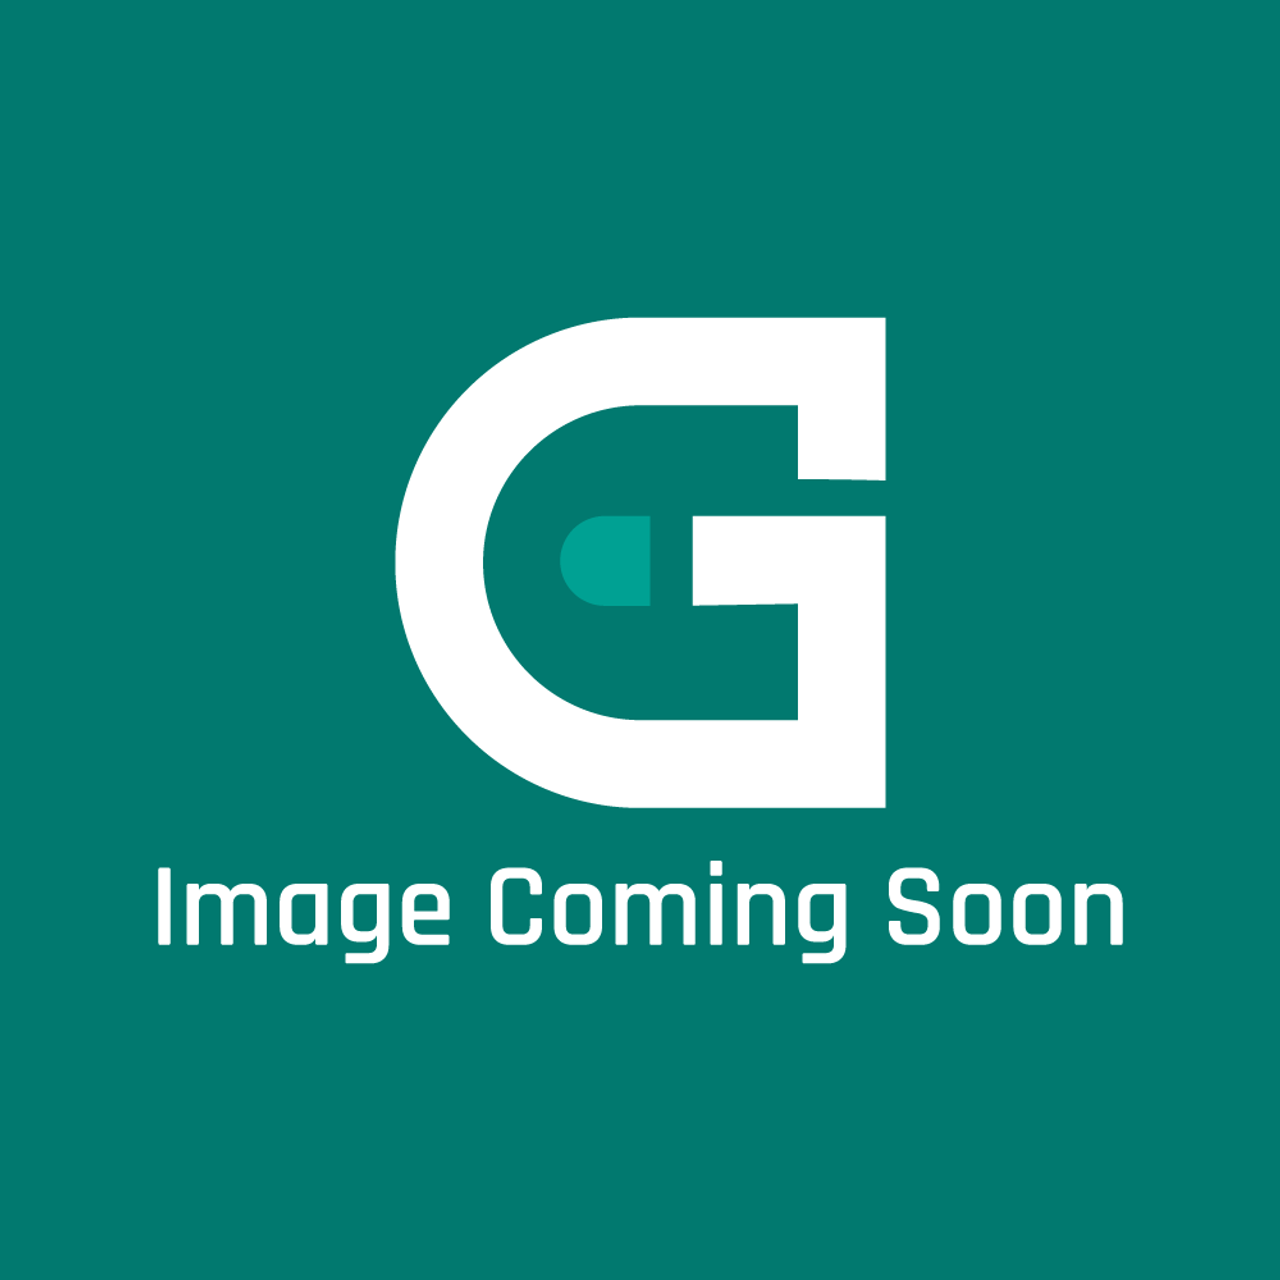 Star Mfg 2IZ14670 - Grease Filter 16 X 20 - Image Coming Soon!